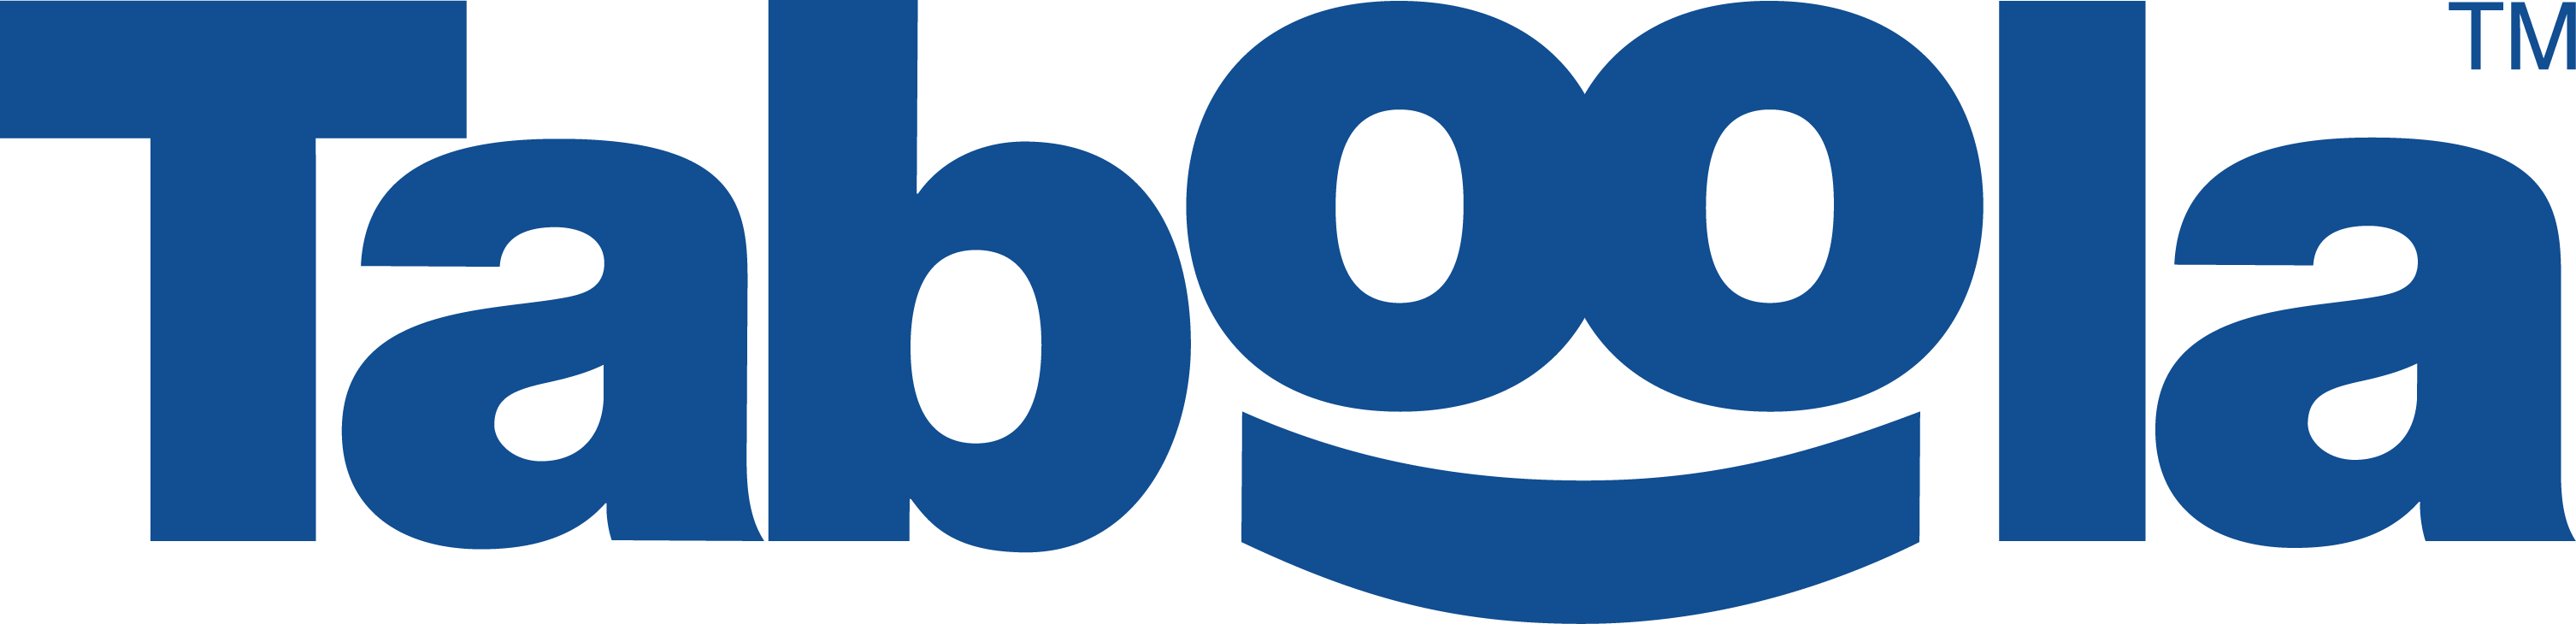 Taboola Publishers - Taboola logo